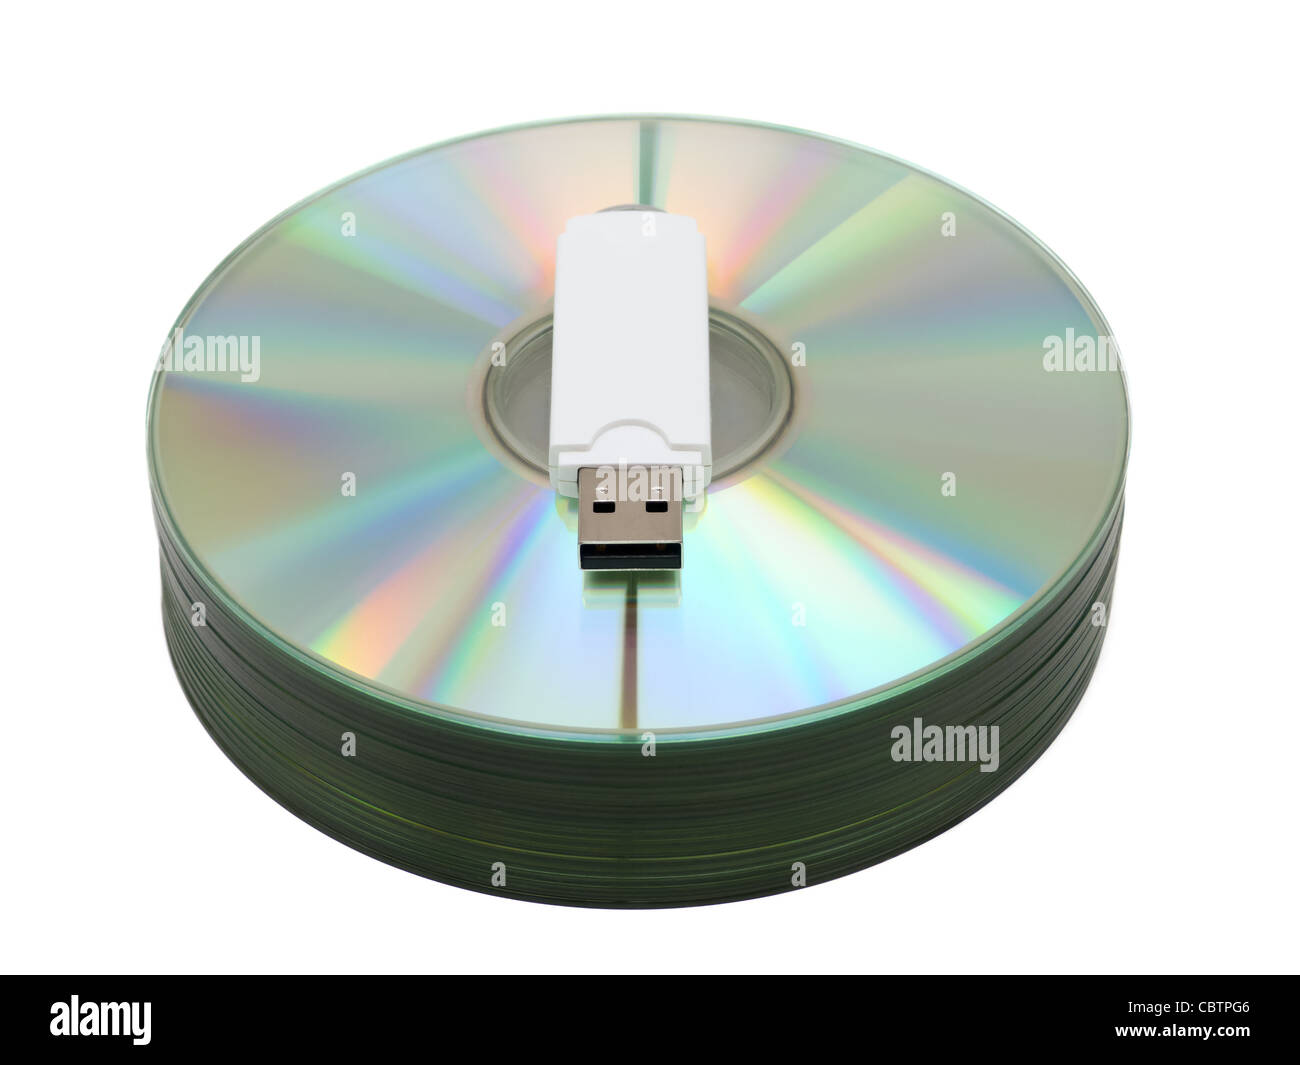 USB flash drive on CD stack Stock Photo - Alamy